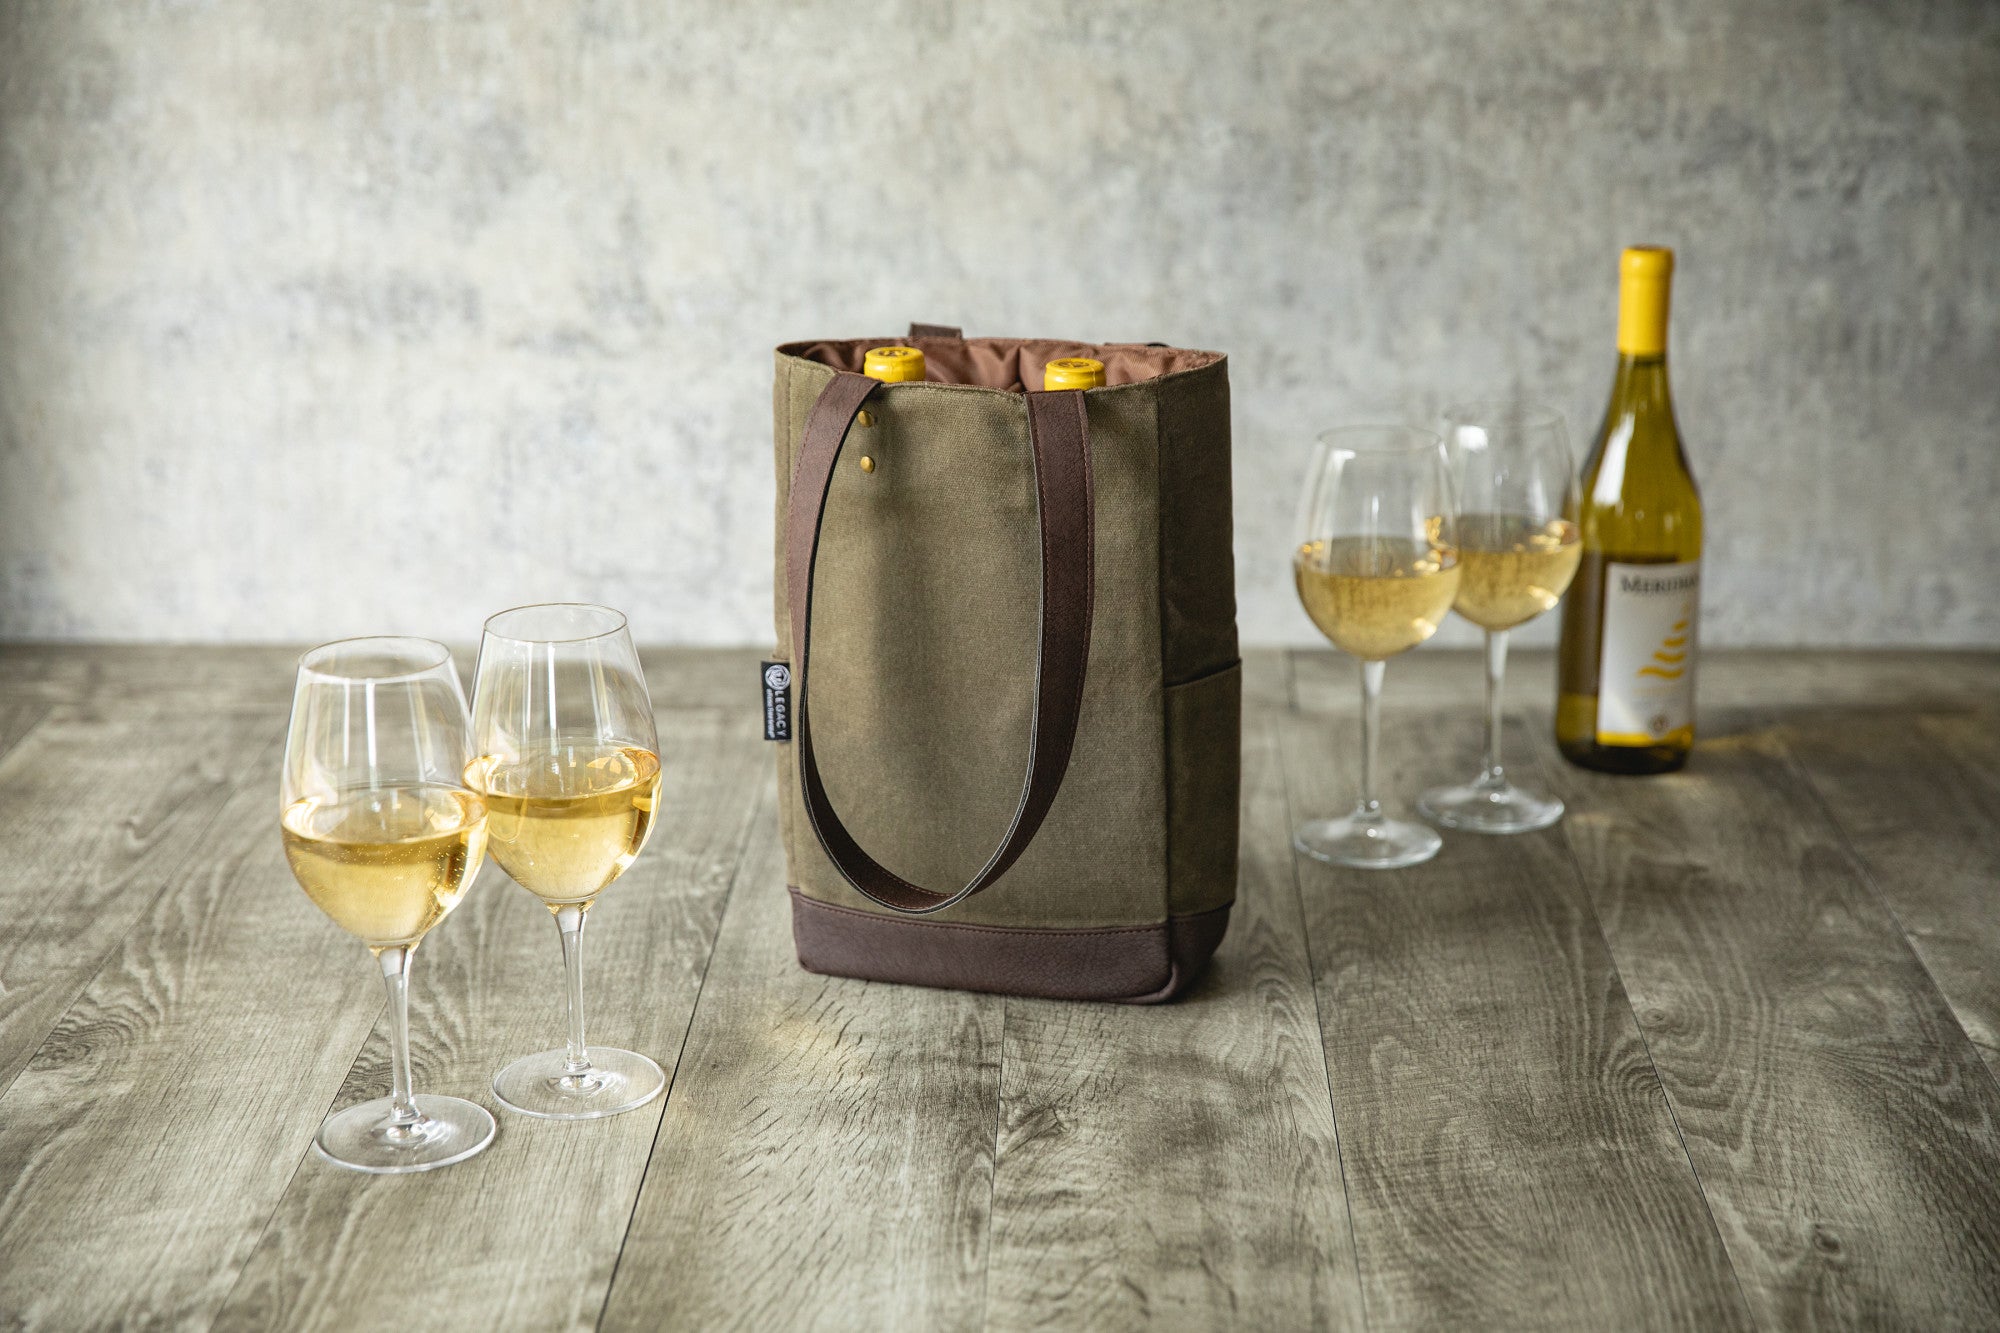 Las Vegas Raiders - 2 Bottle Insulated Wine Cooler Bag